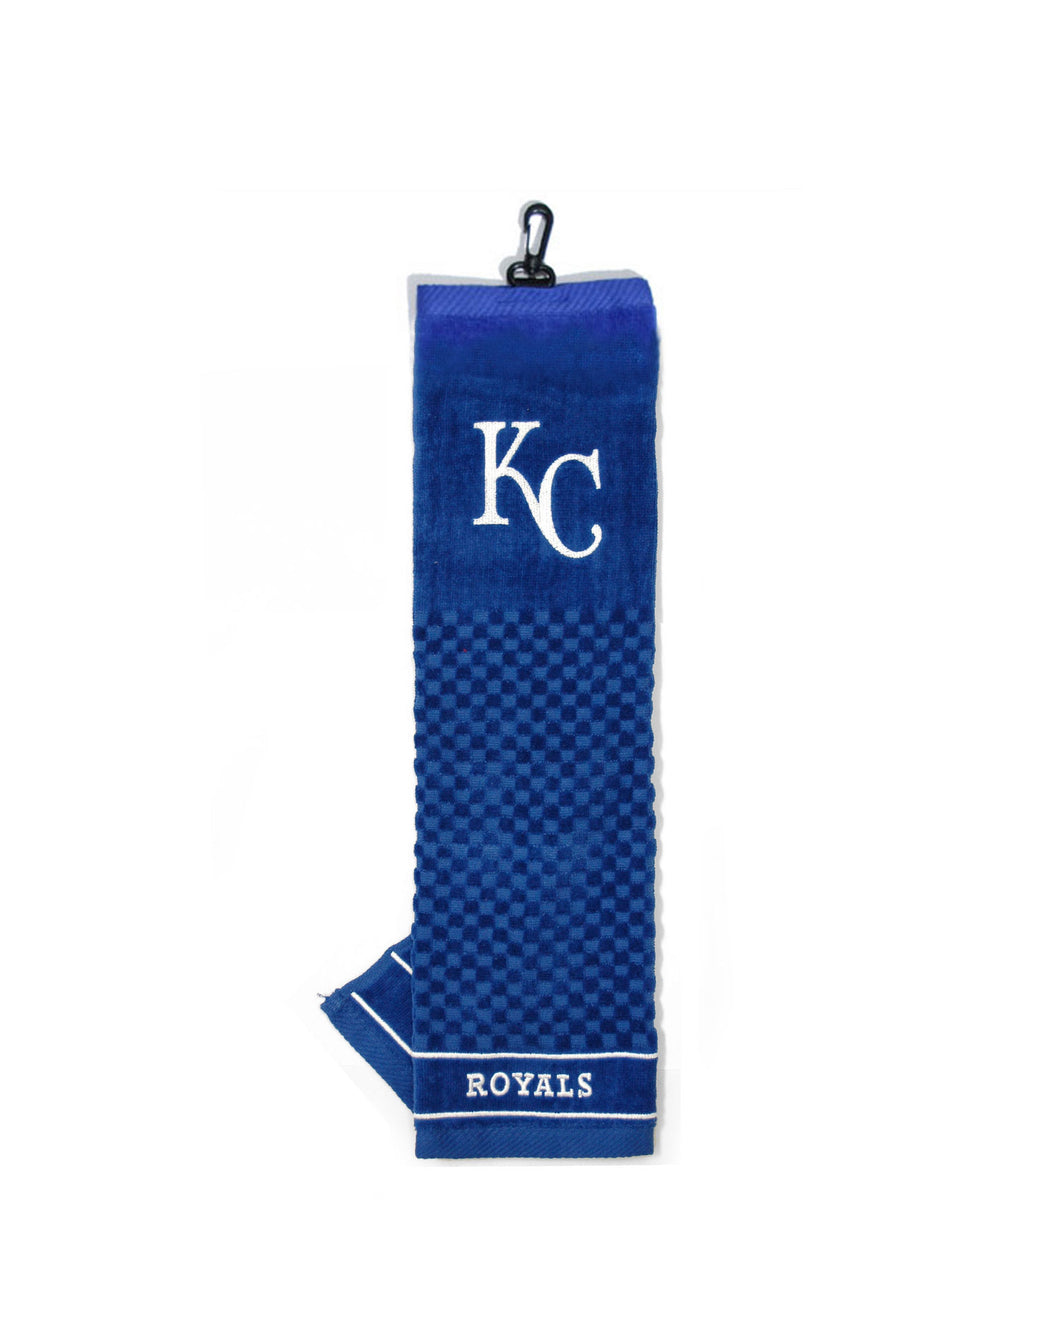 MLB Major League Baseball Official Golf Tri-Fold Towel. Kansas City Royals.